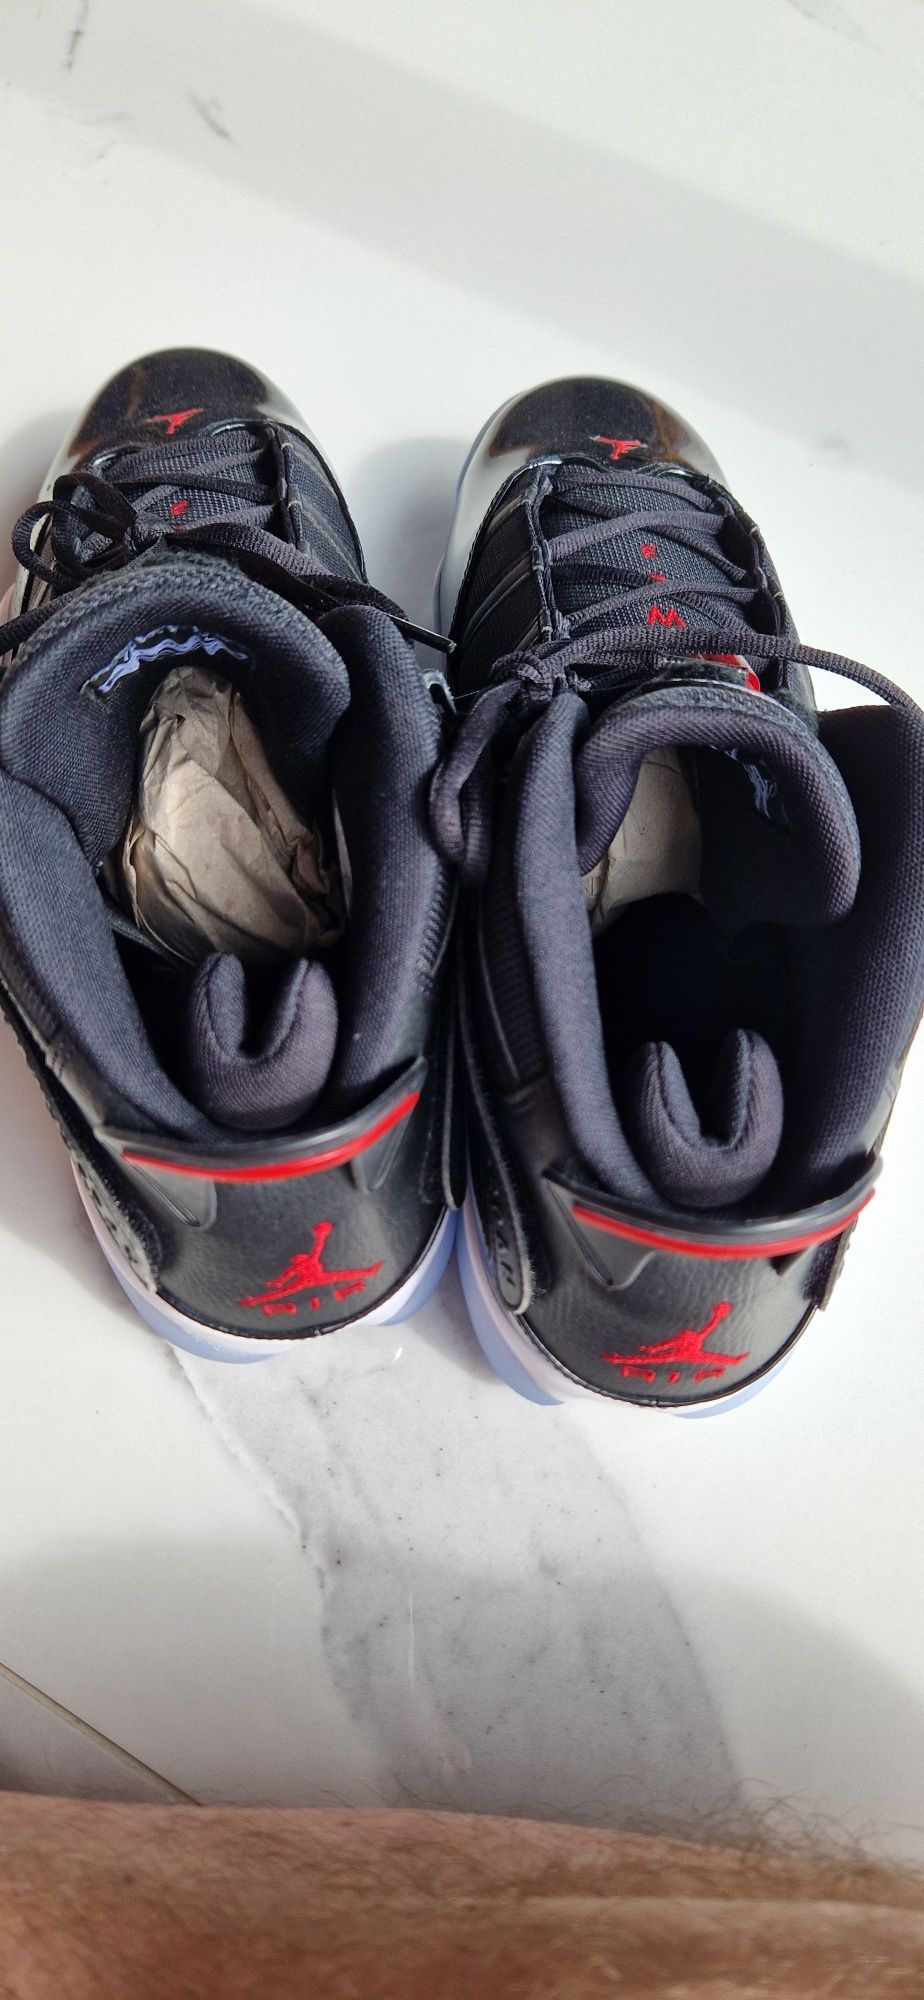 Nike Air Jordan 6 Rings Bred Chicago US 15/ EUR 49.5 NWOB